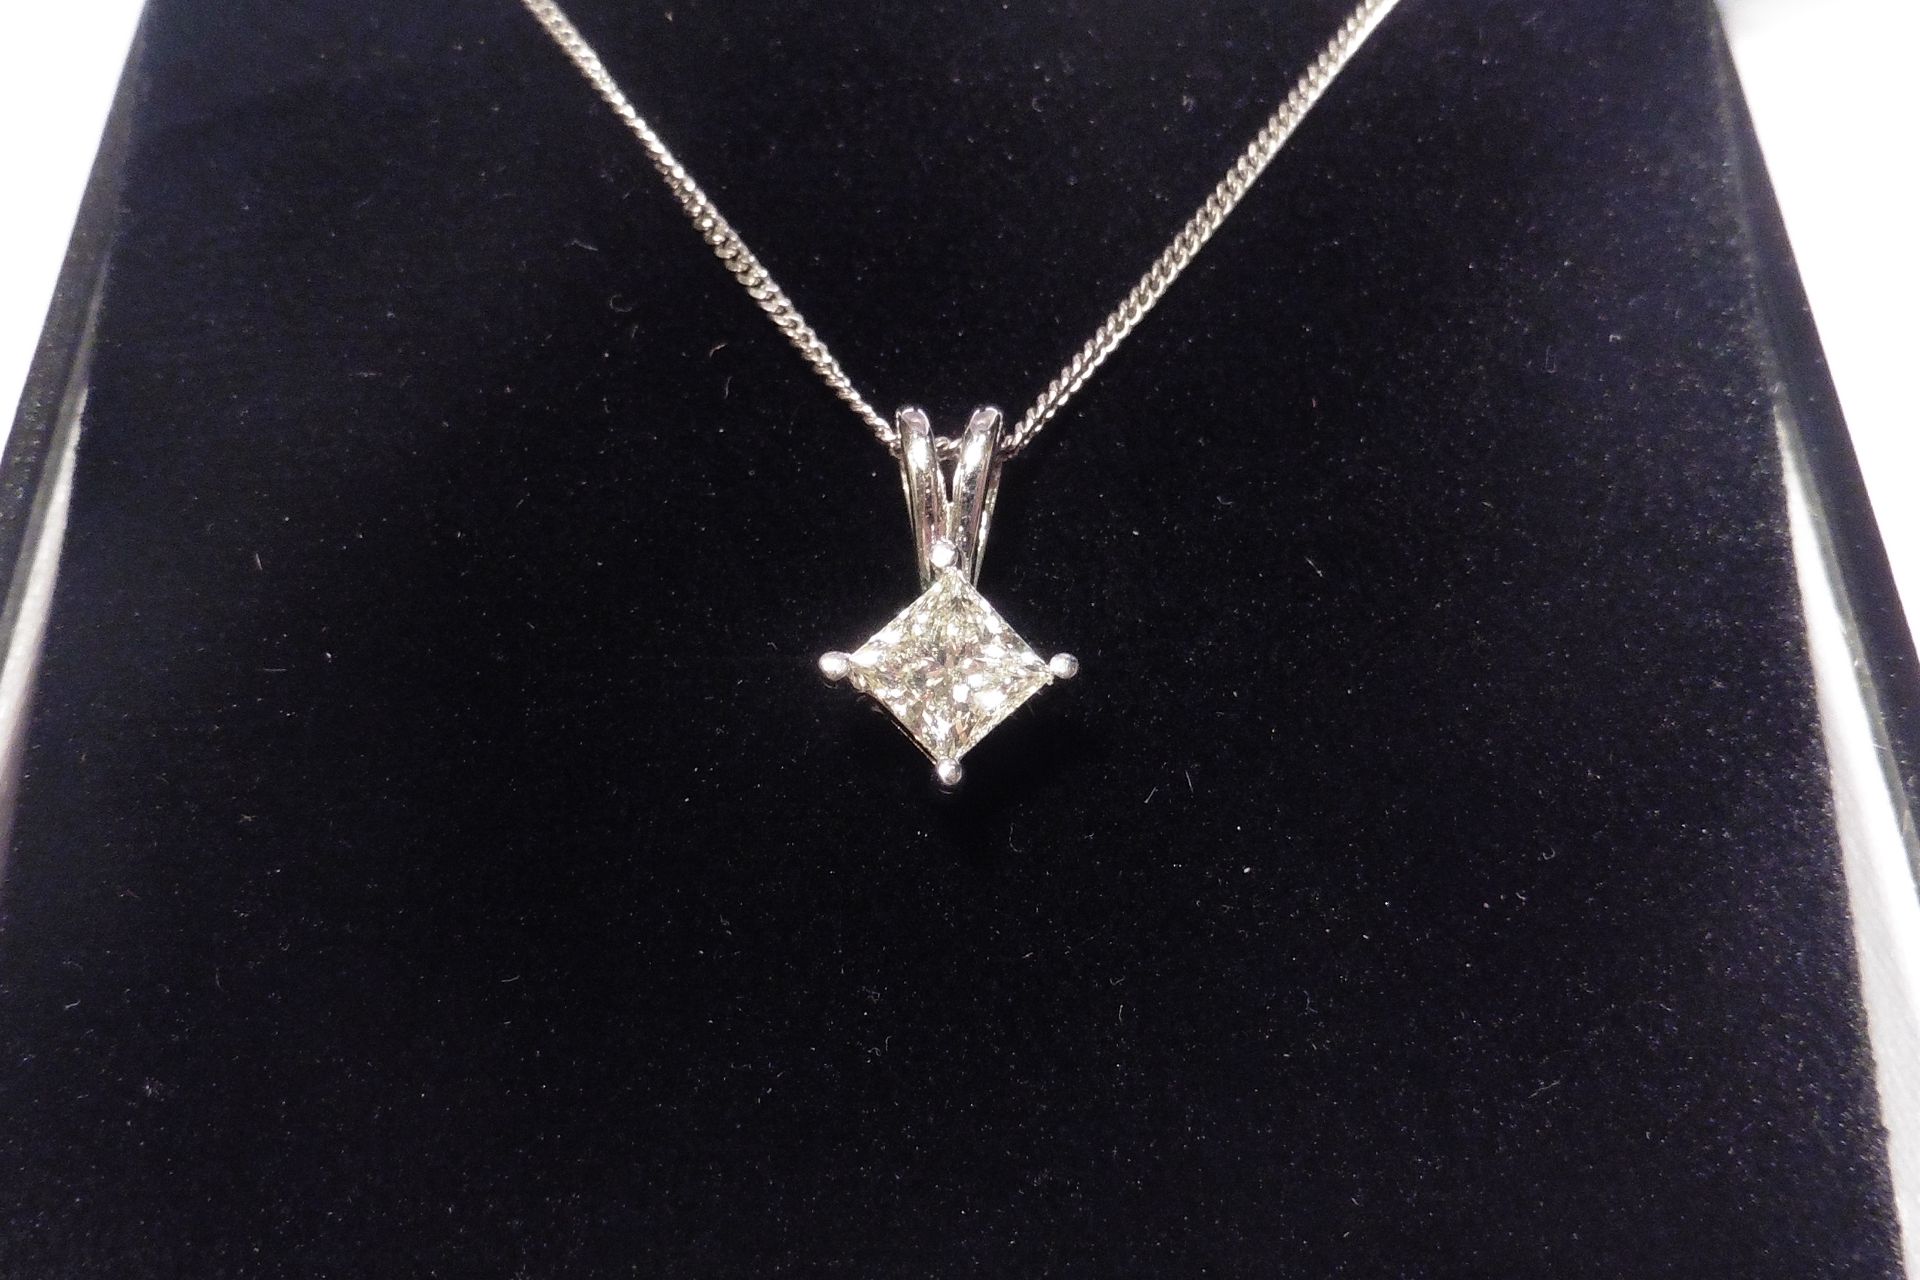 18ct white gold diamond solitaire style pendant, set with a single princess cut diamond, of H colour